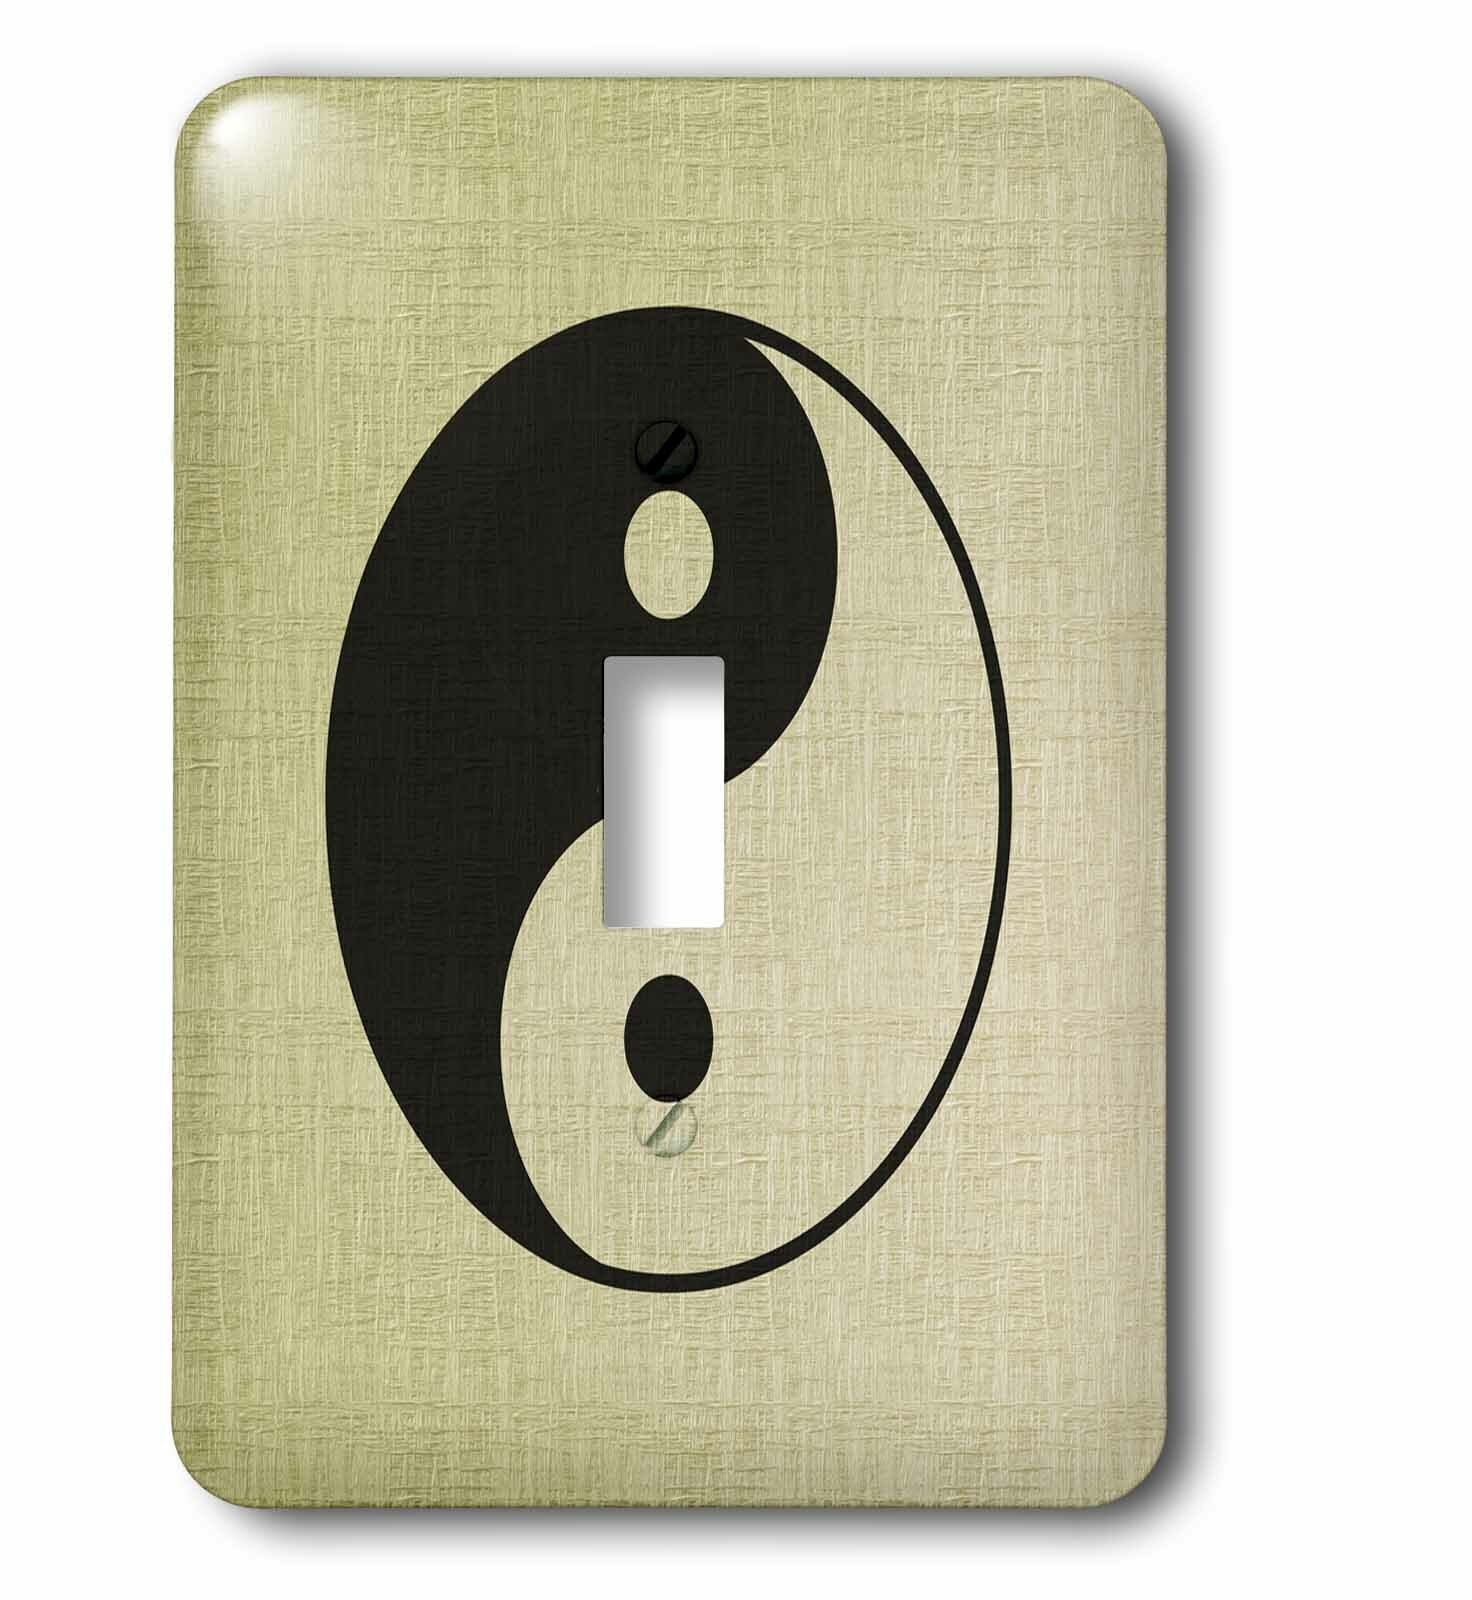 Yin Yang Decorative Single Toggle Light Switch Plate Cover